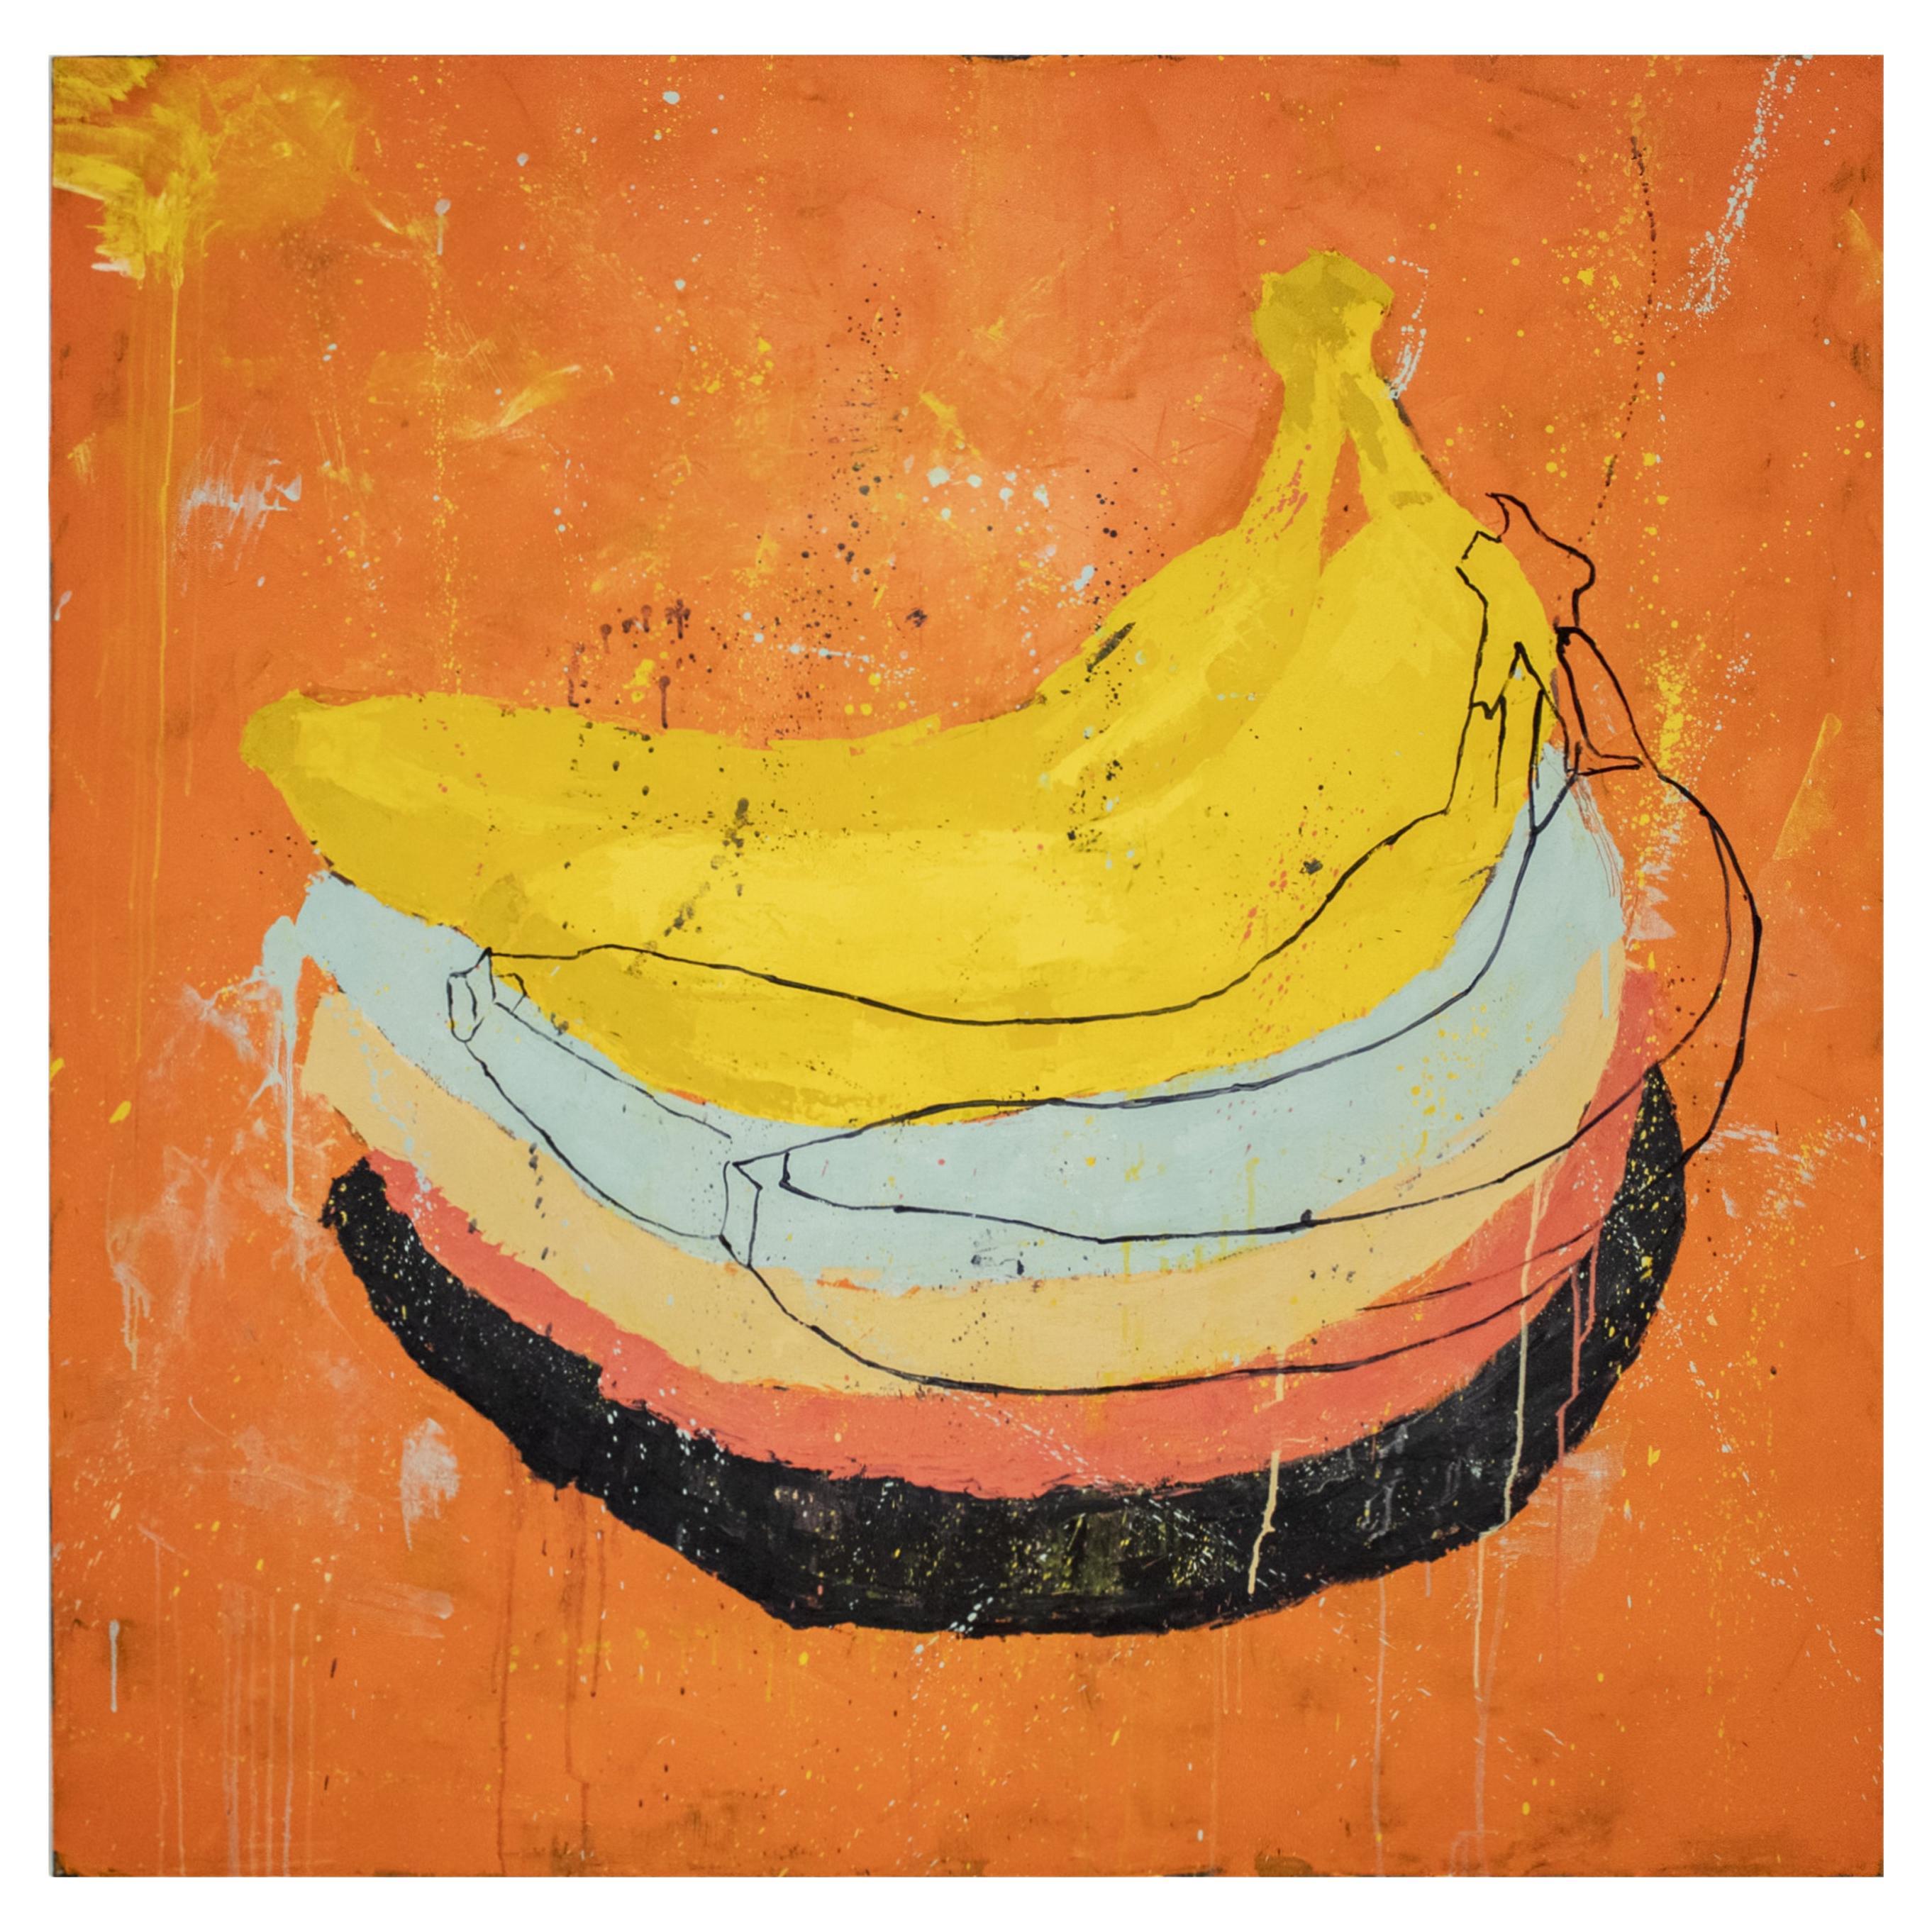 Peinture contemporaine "The Banana" par Ana Laso, Espagne, 2019